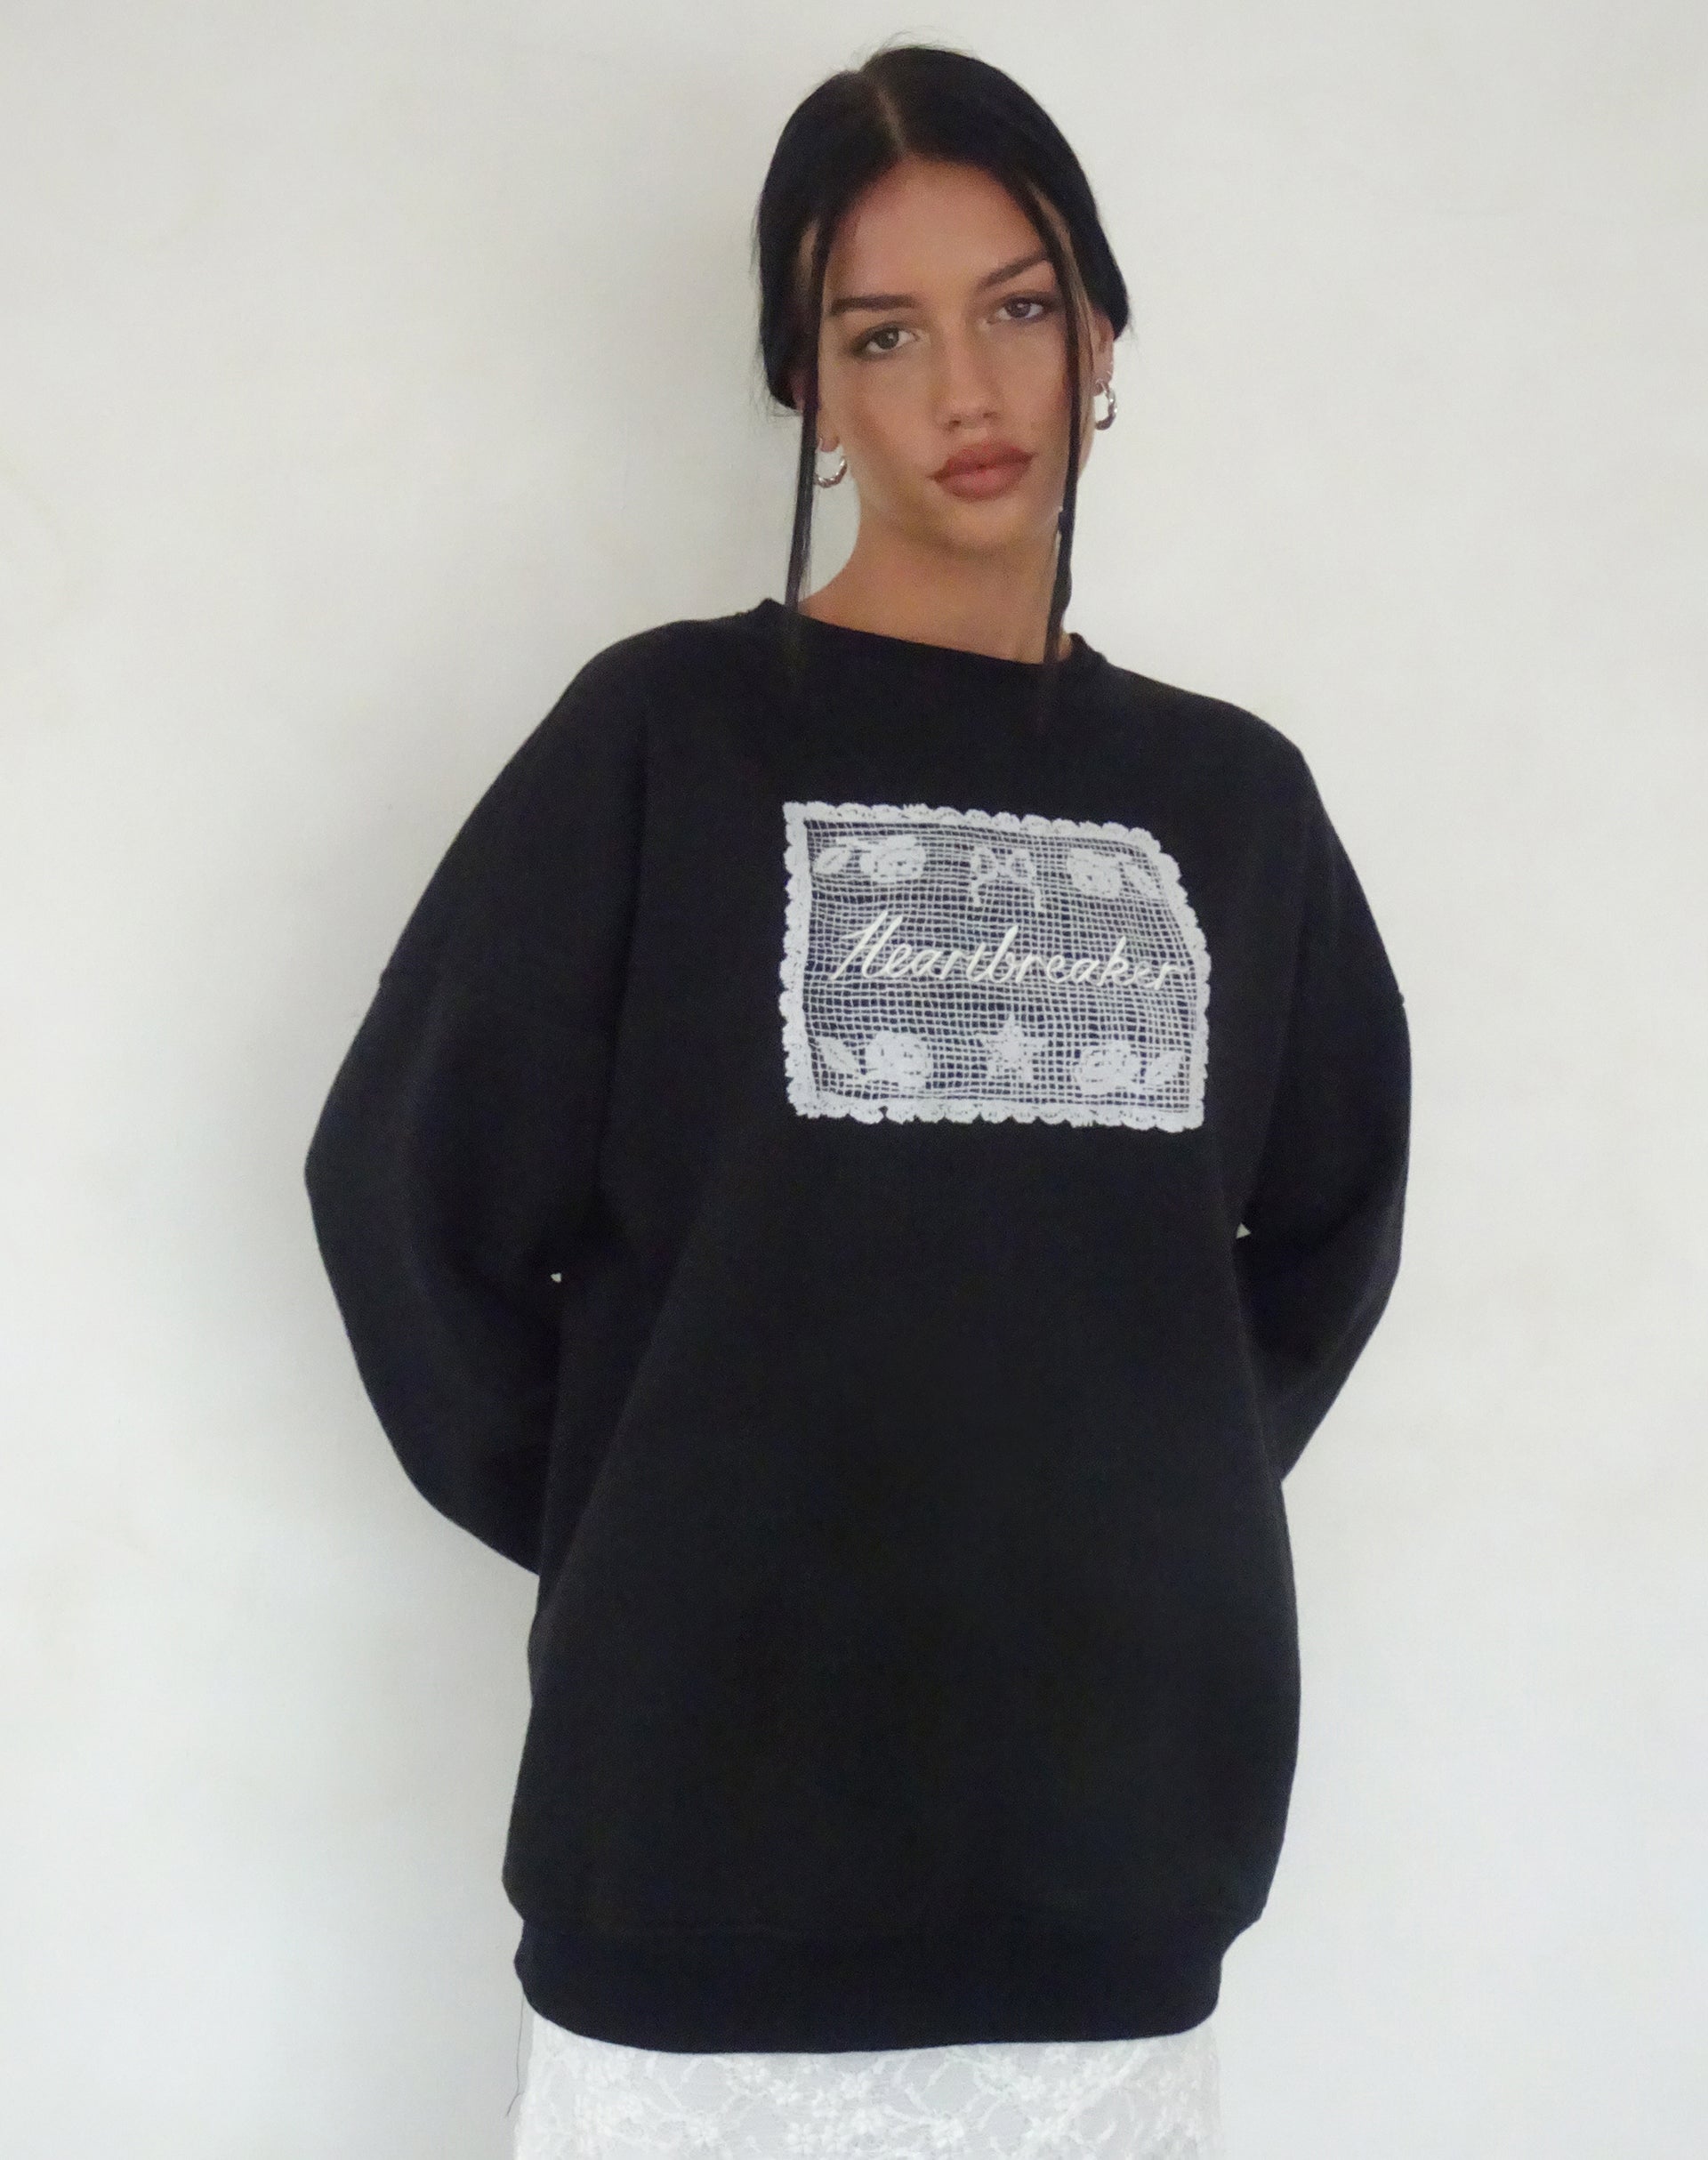 Glo Oversized Sweatshirt in Black with Heartbreaker Graphic